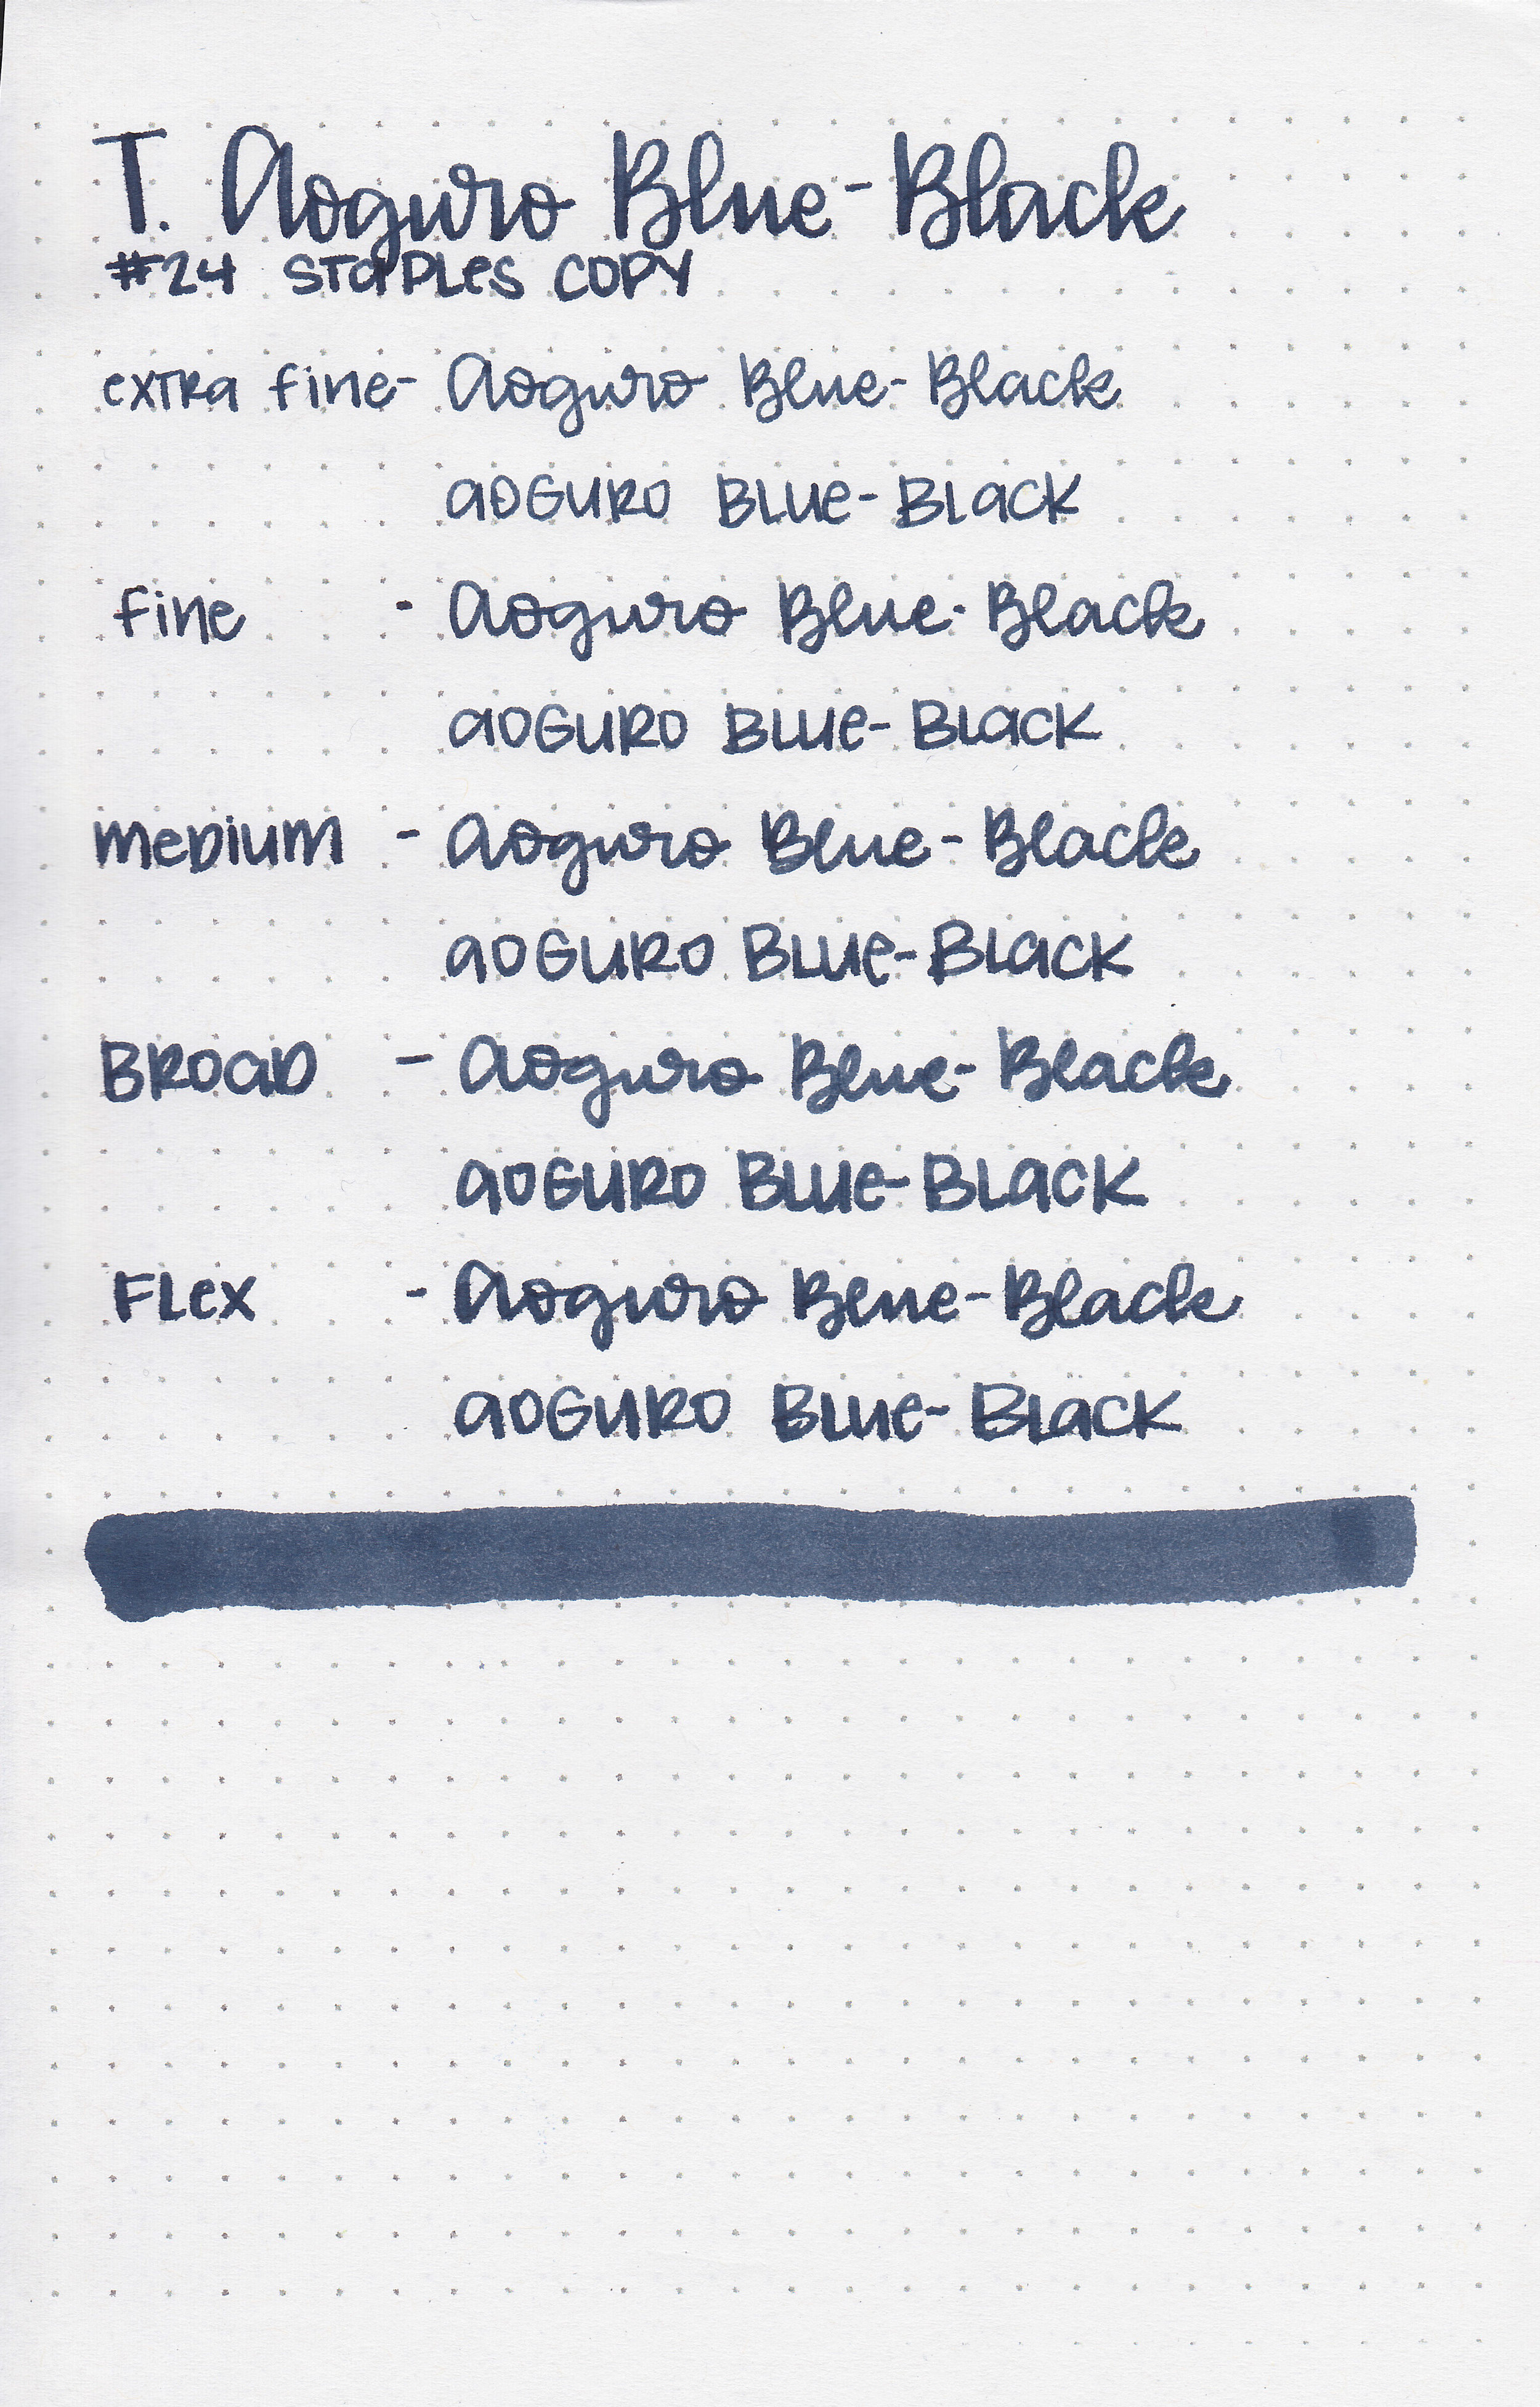 tac-aoguro-blue-black-2.jpg